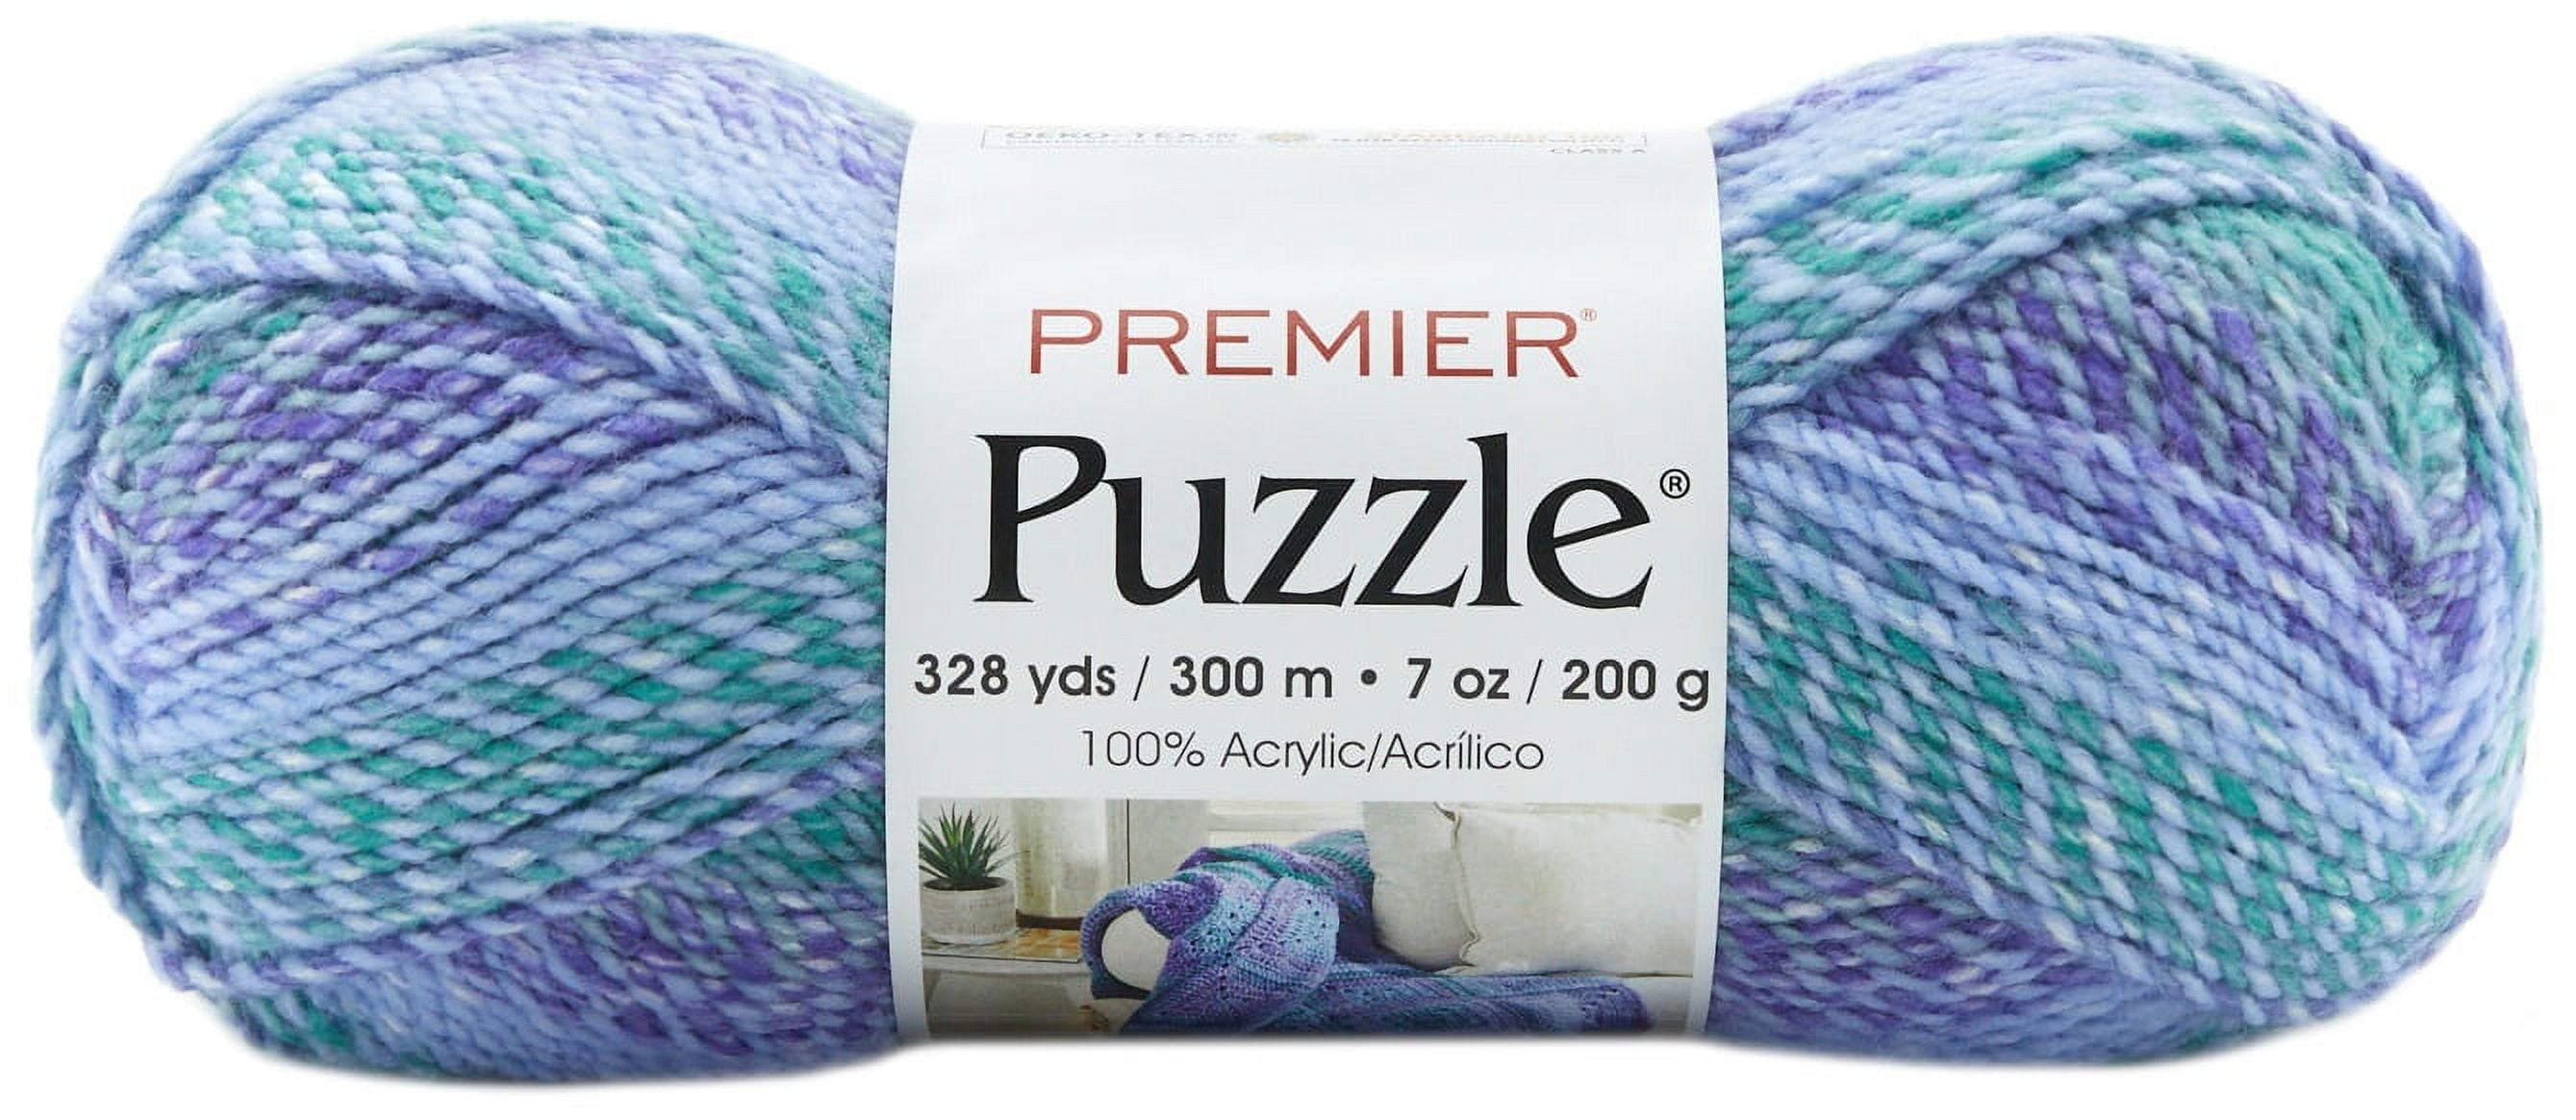 Premier Yarns Puzzle Yarn - Tangram